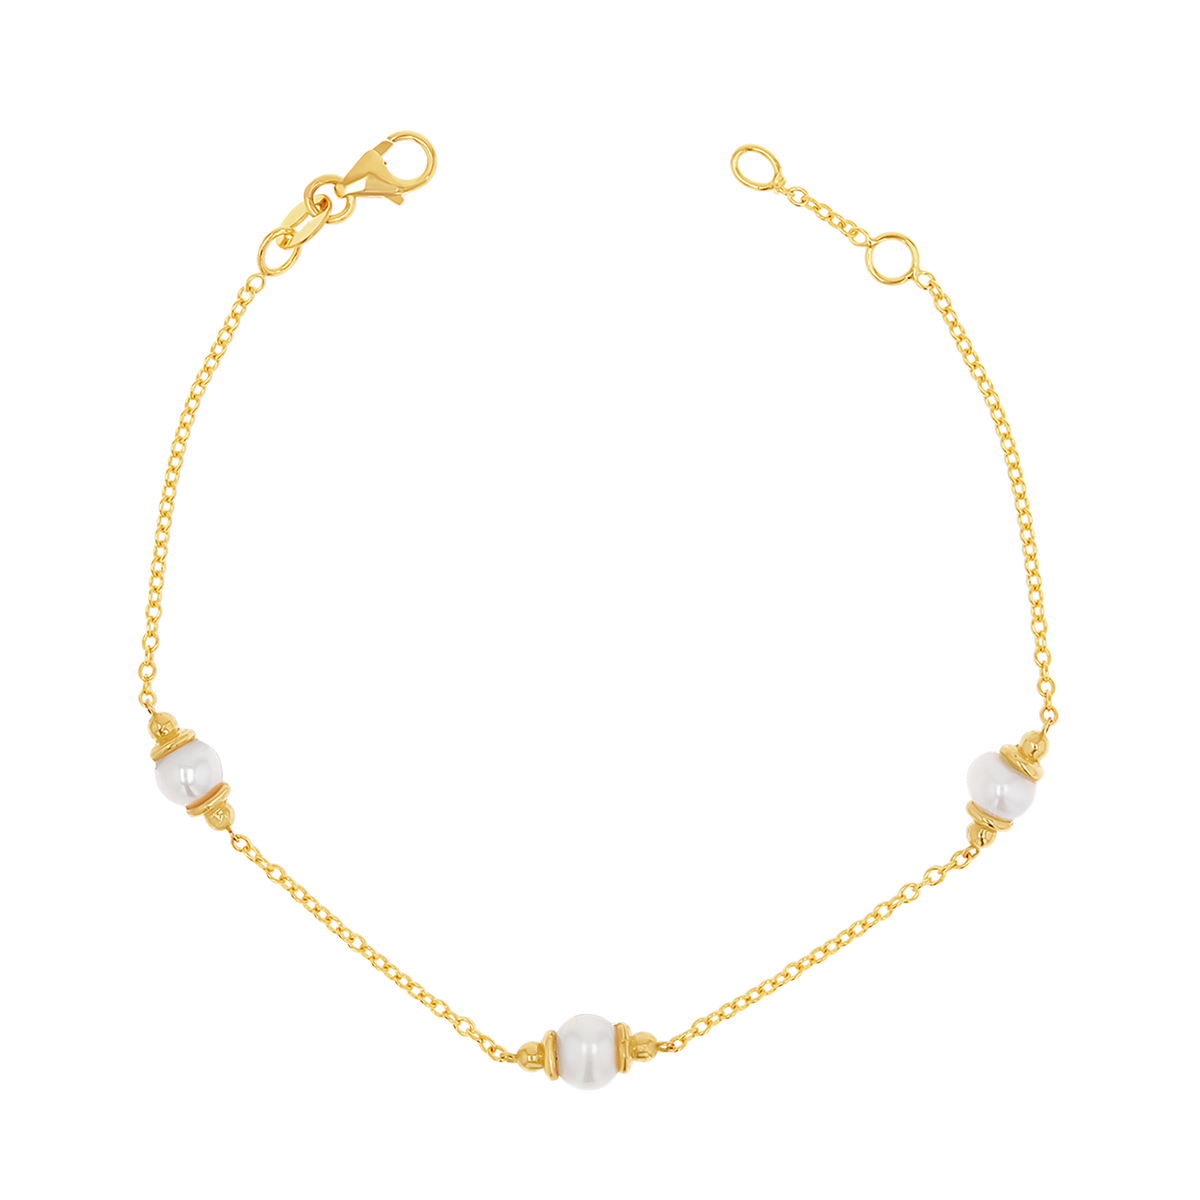 Dainty Ball Bracelet 14K White Gold / 7 - 7.5 (Adjustable) by Baby Gold - Shop Custom Gold Jewelry